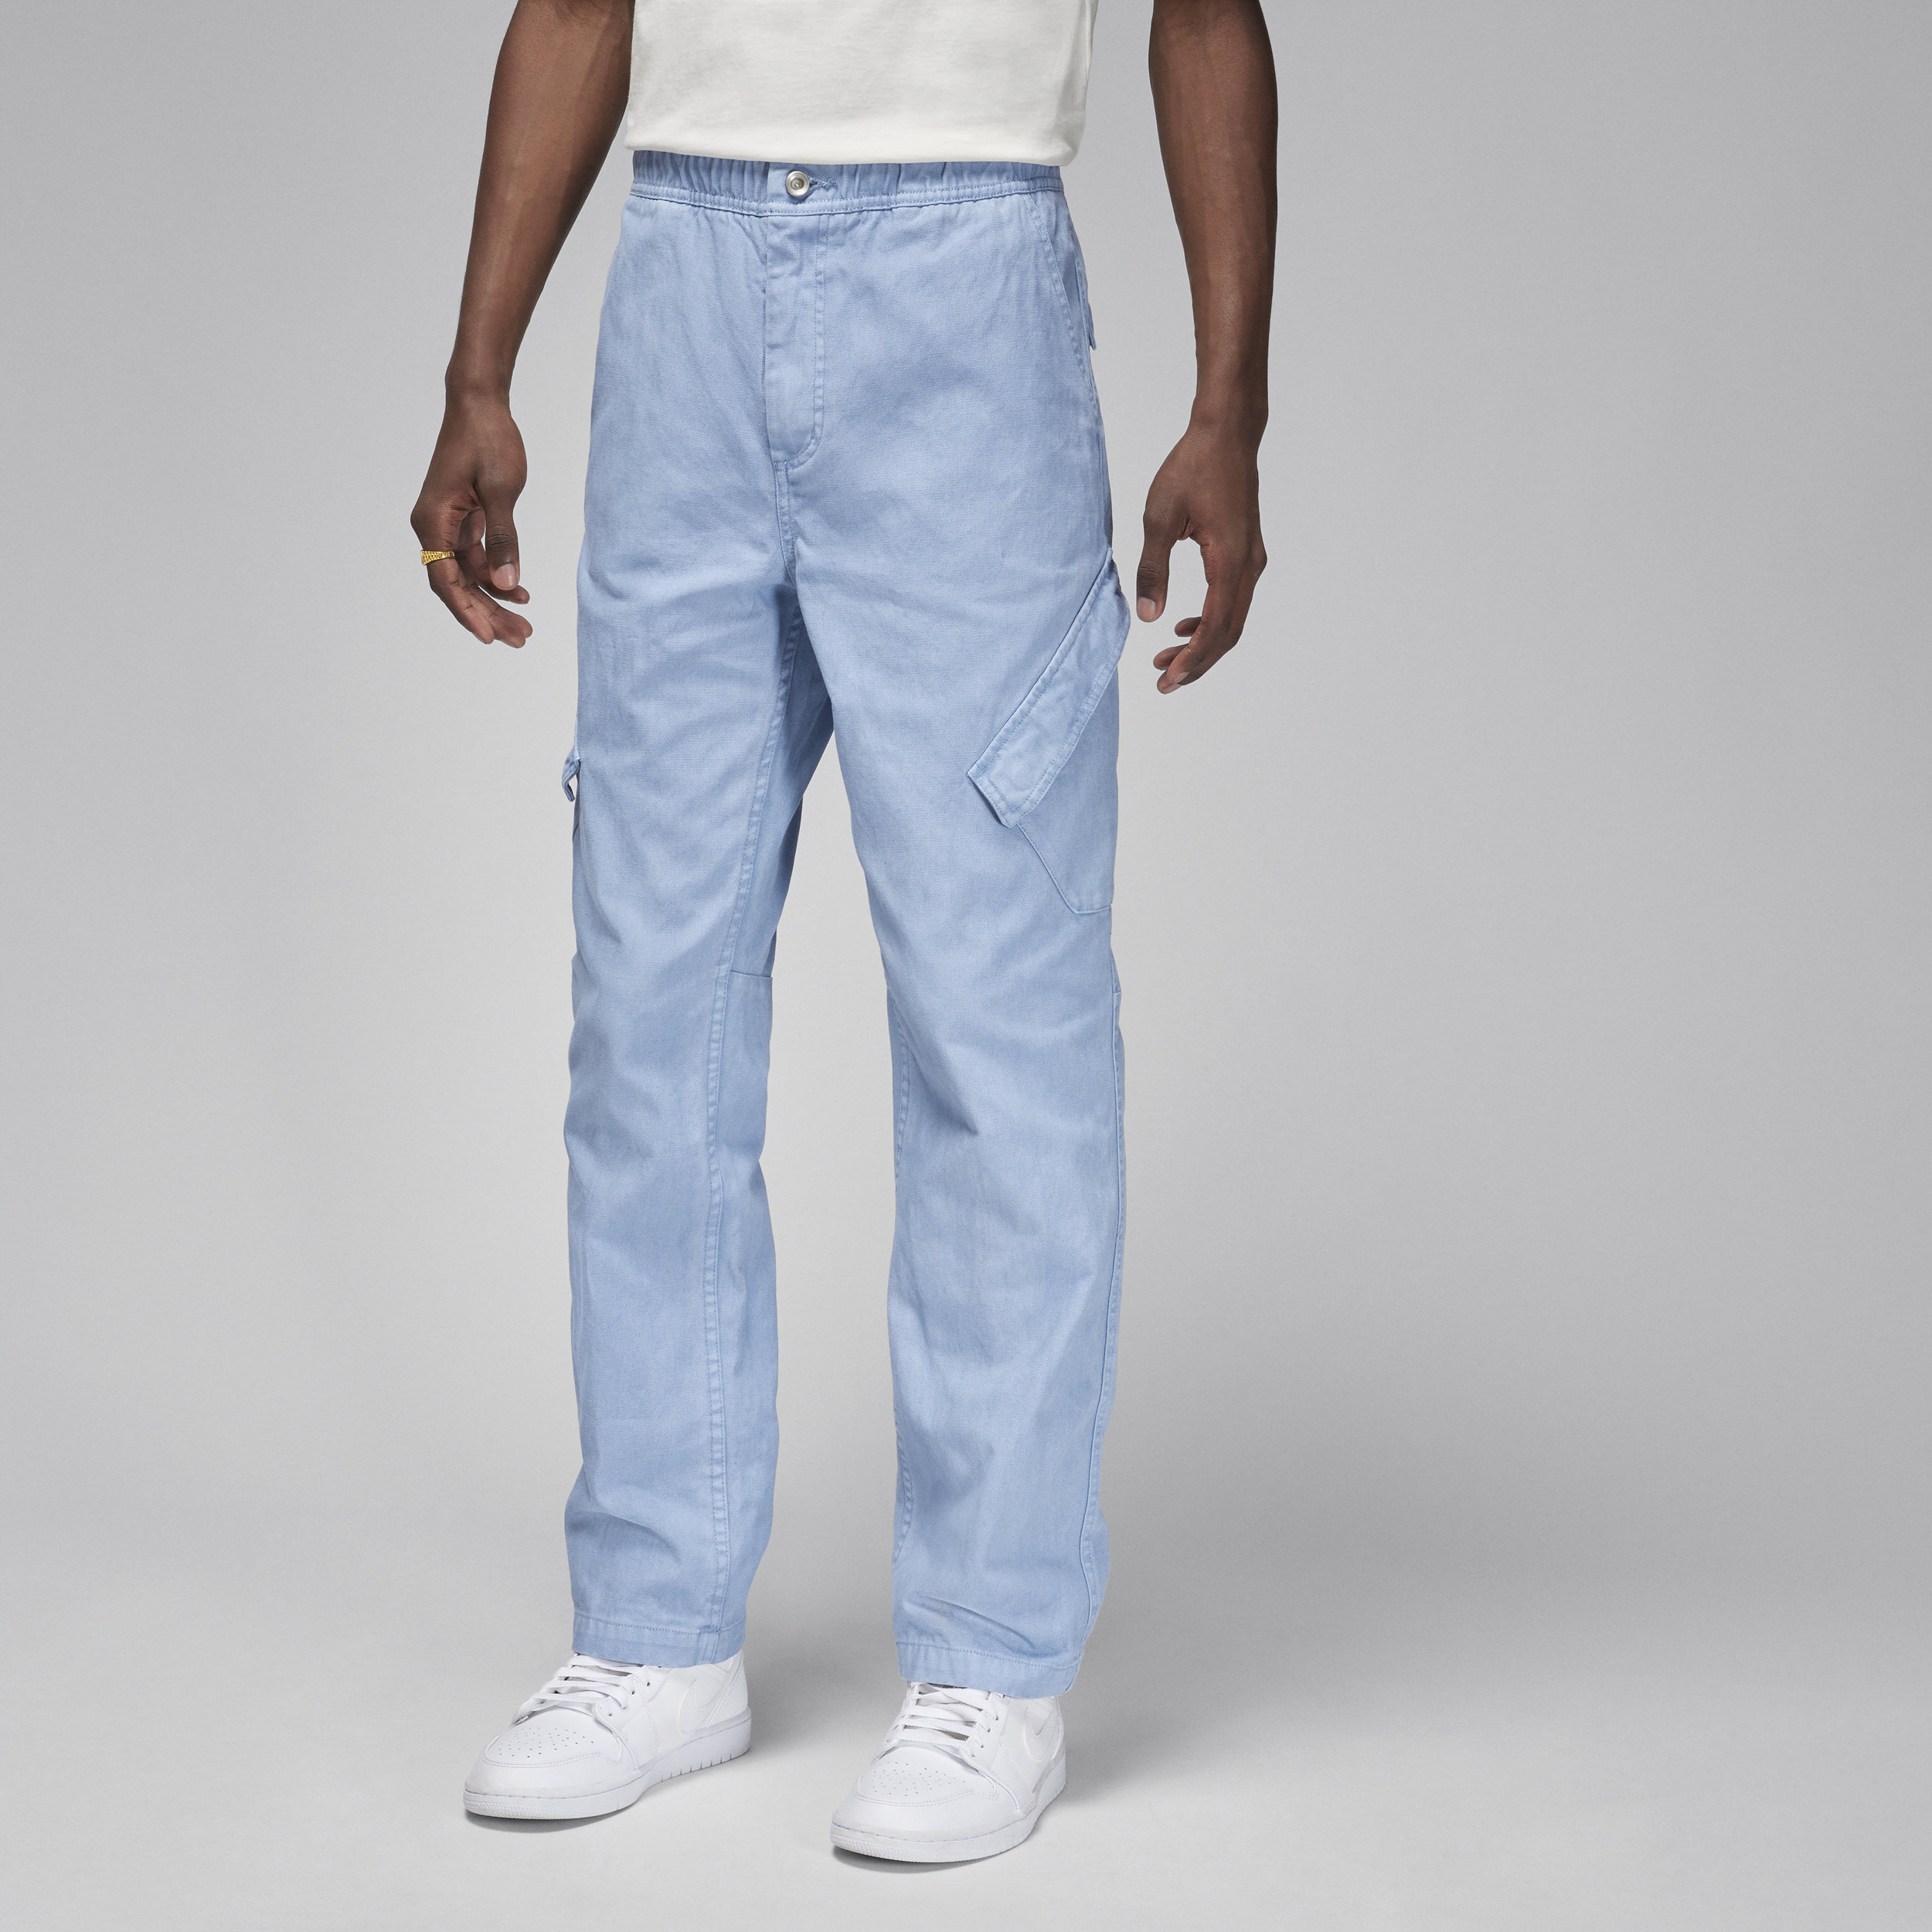 Jordan Essentials Pantalón lavado Chicago - Hombre - Azul